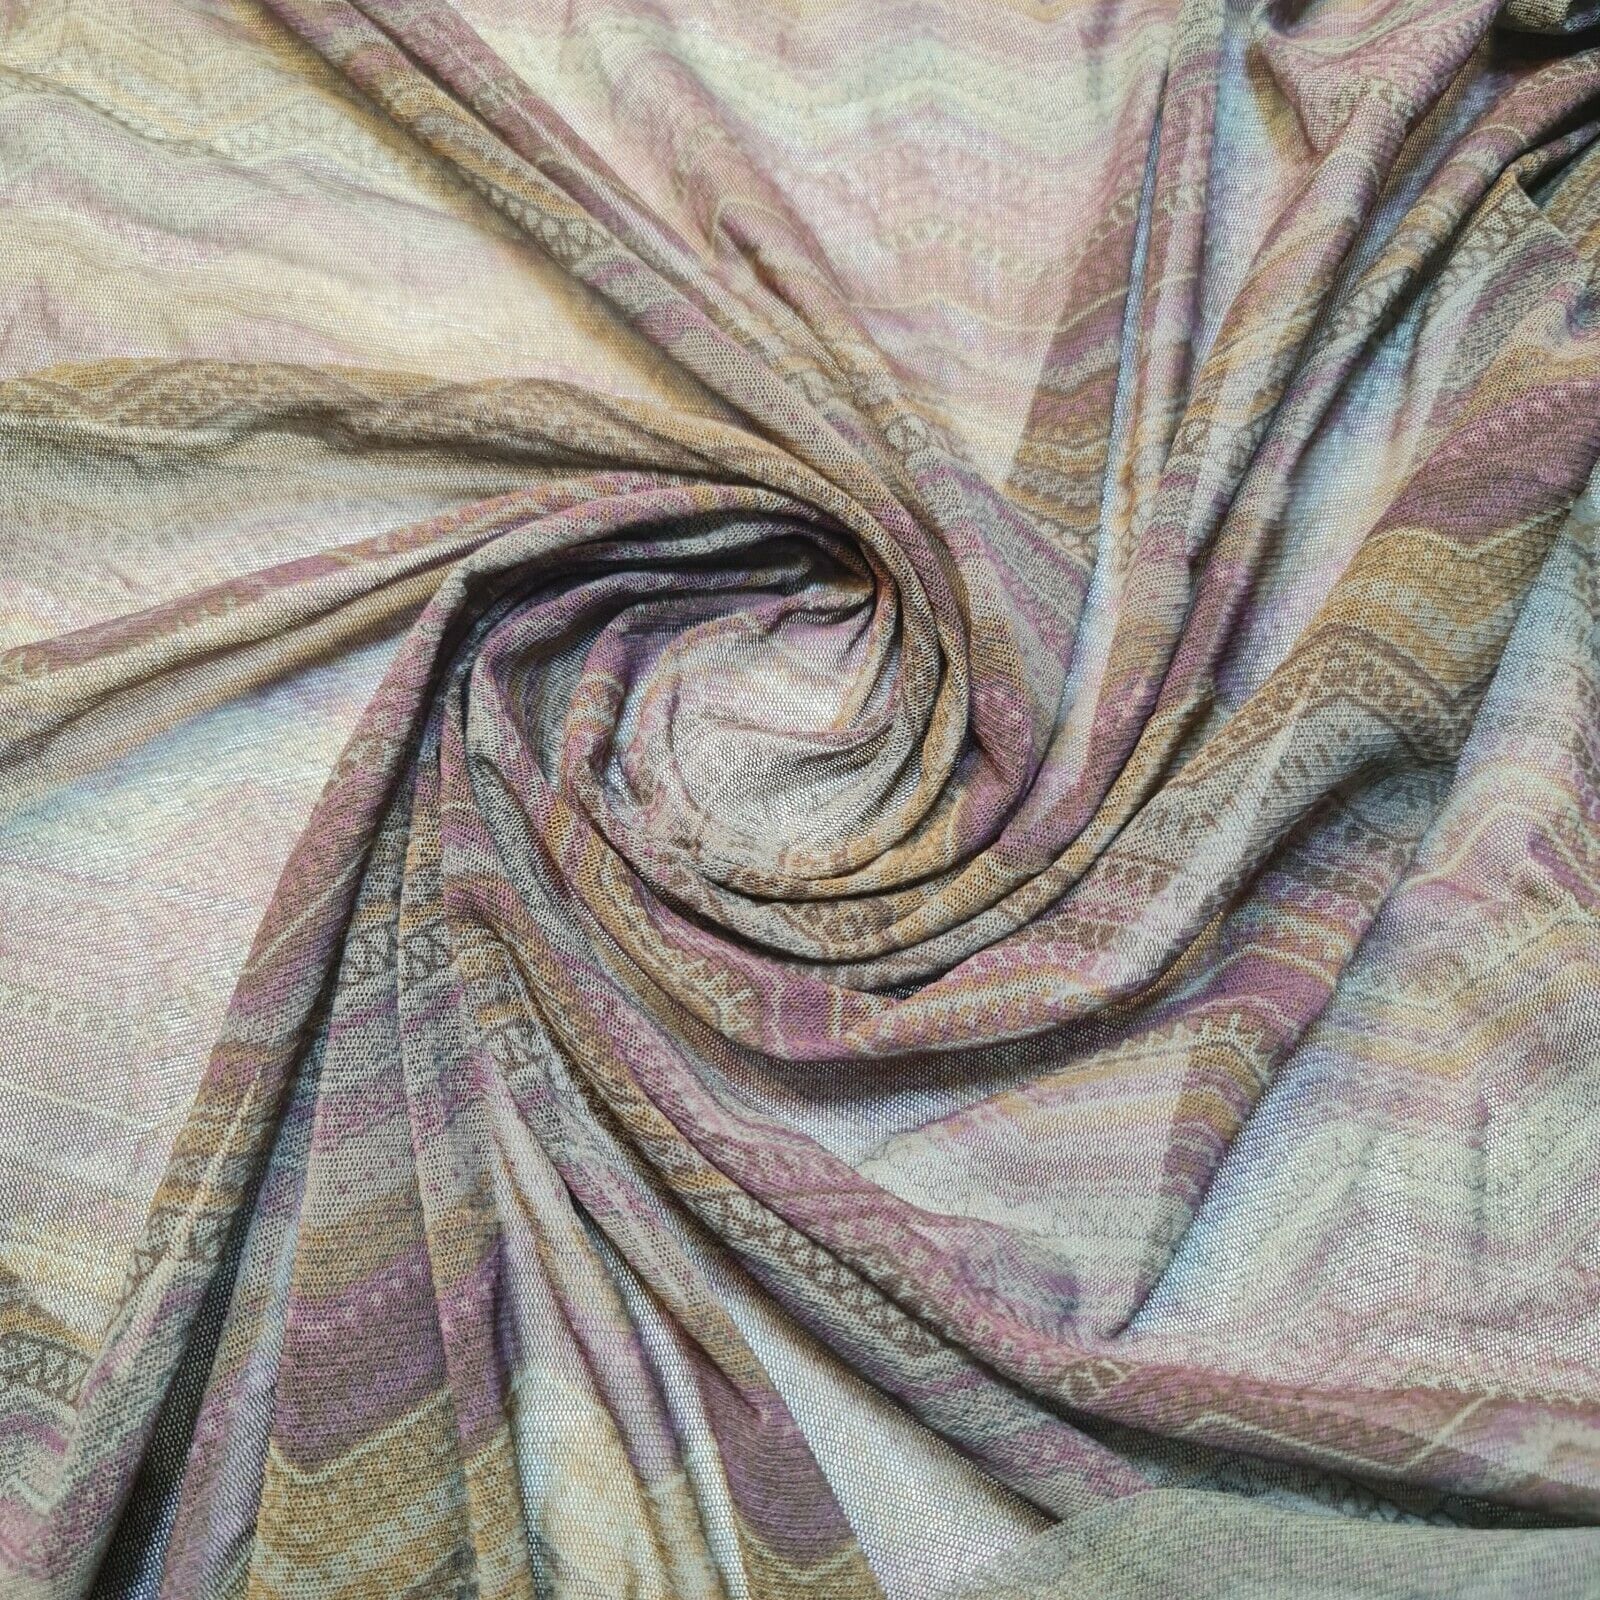 Mesh 2X2 diamond for the lining fabric -- Bonher Textile